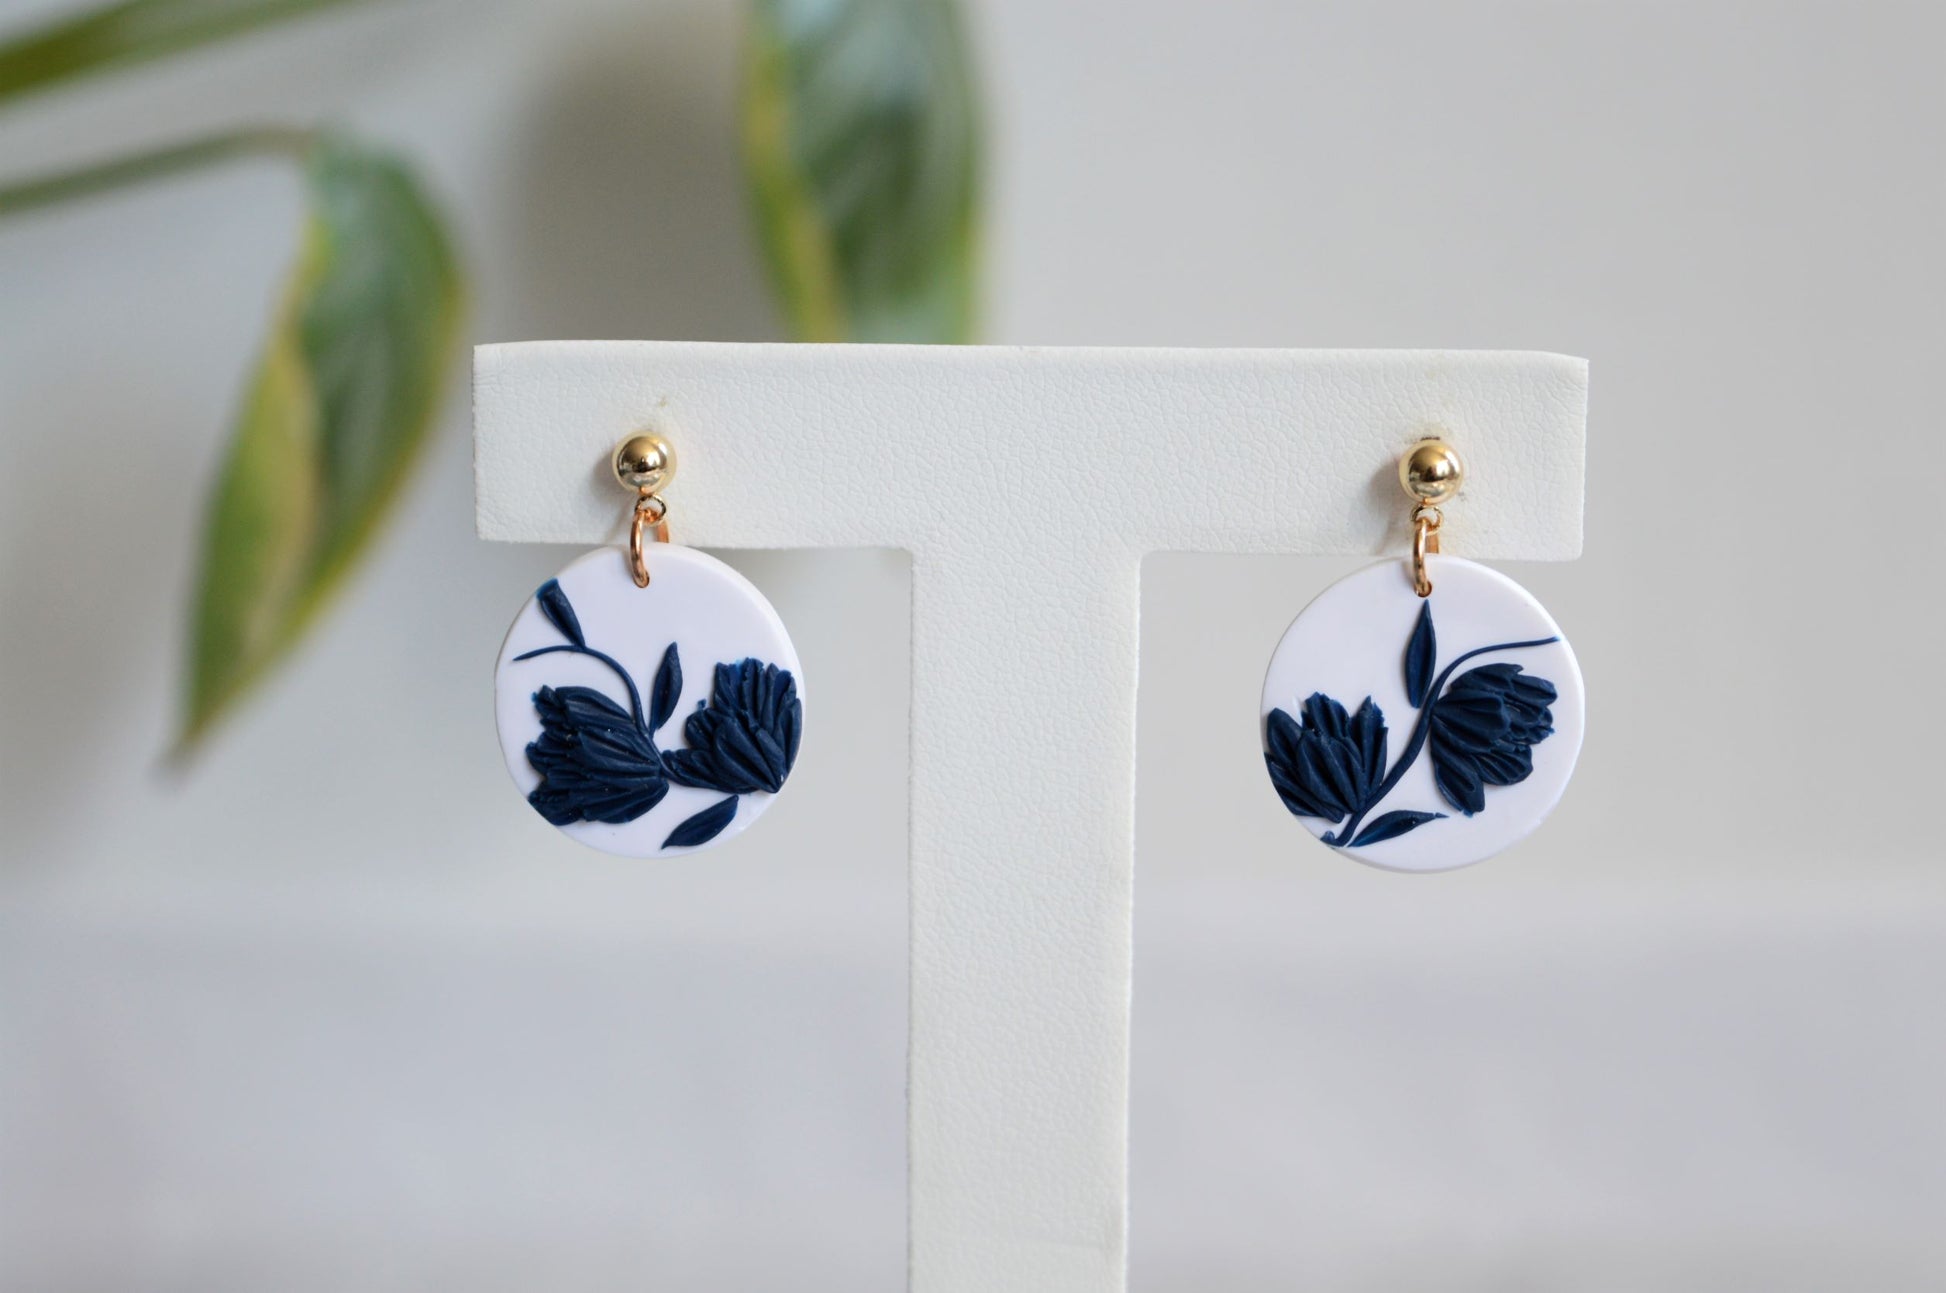 Mini Floral Clay Earrings - Grecian Blue Island Meadow Clay